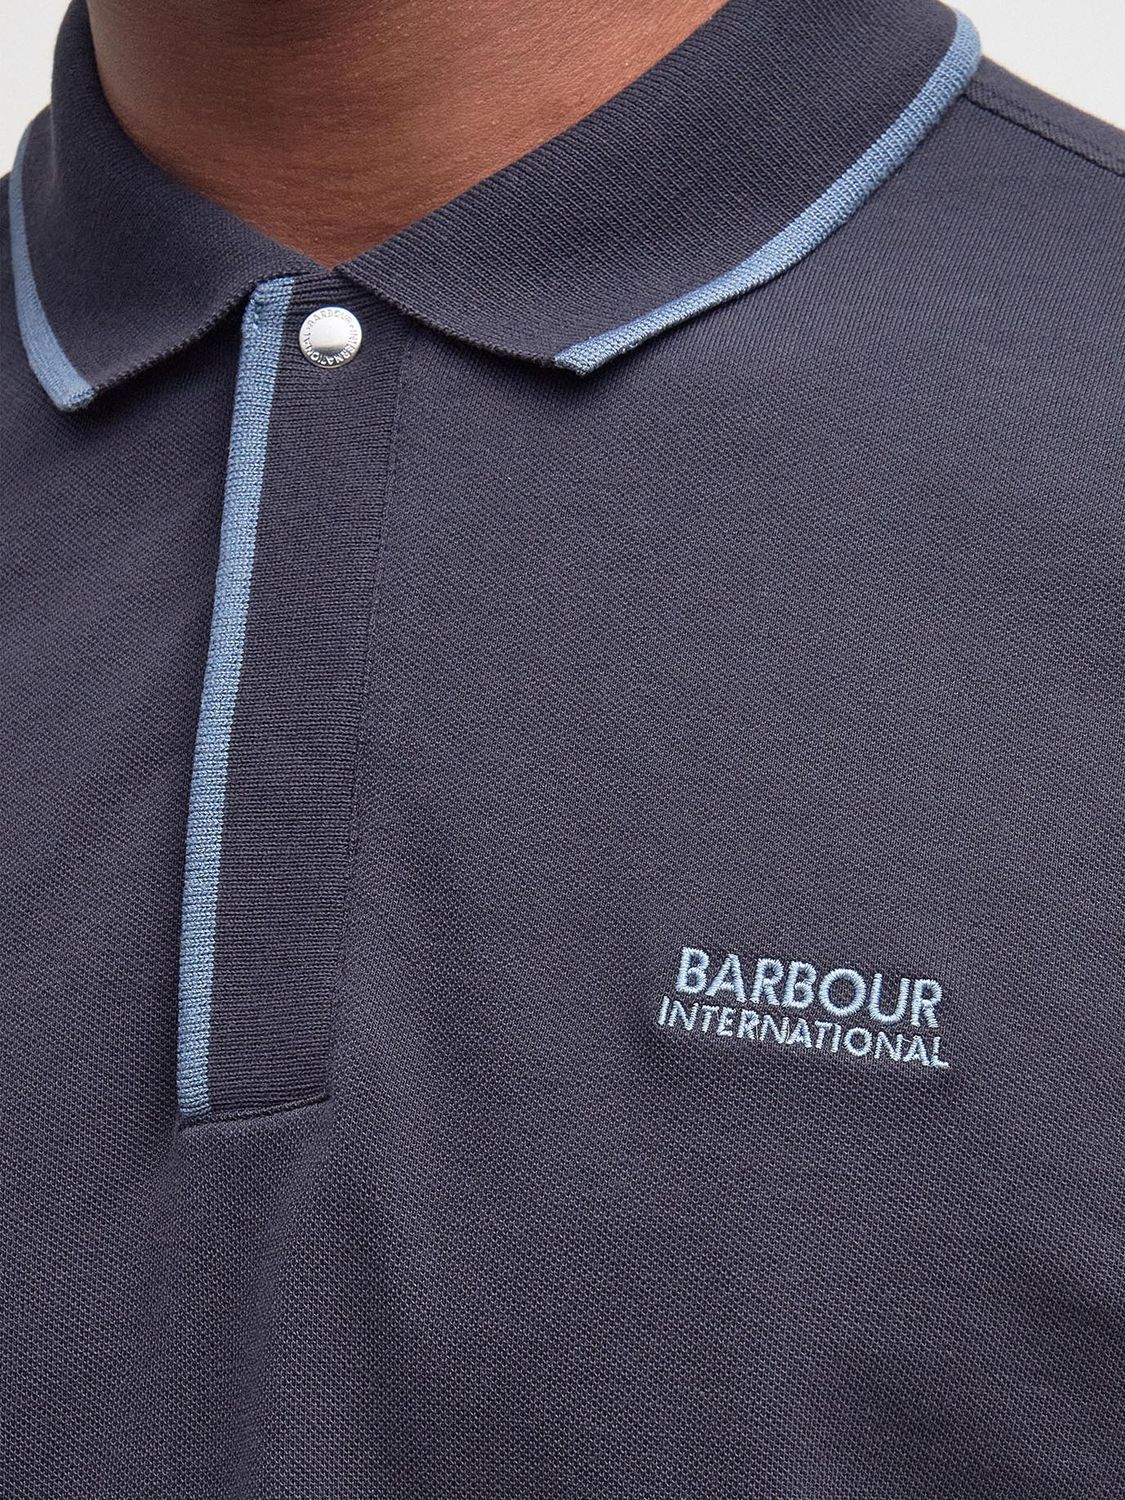 Barbour International Daytona Tipp Polo Shirt, Dark Navy, S